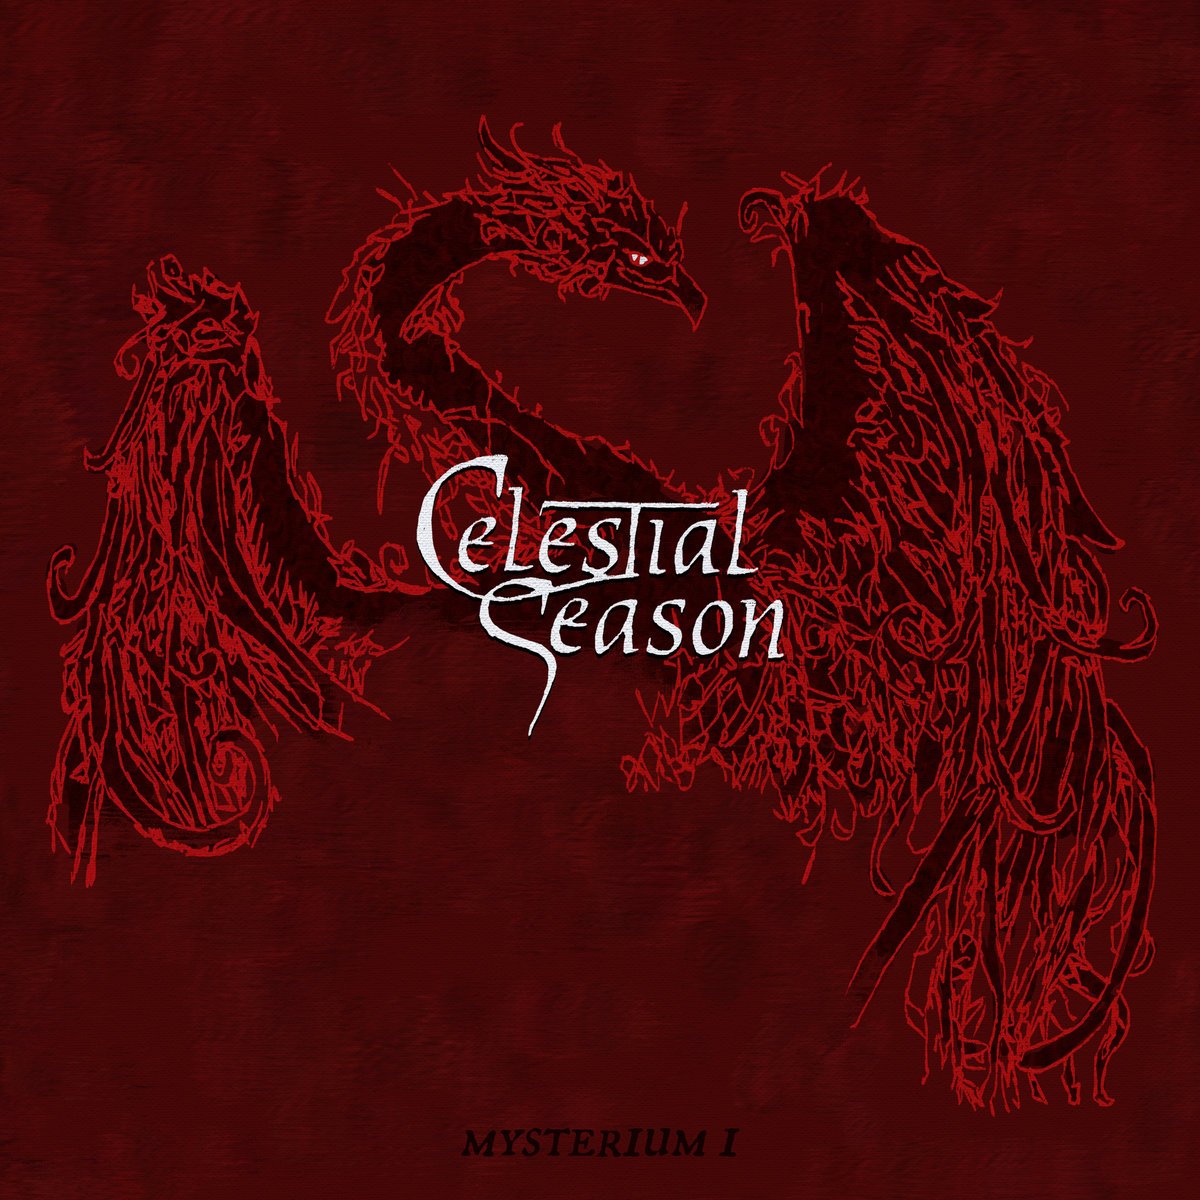 Celestial Season - Mysterium I (2022) FLAC Download